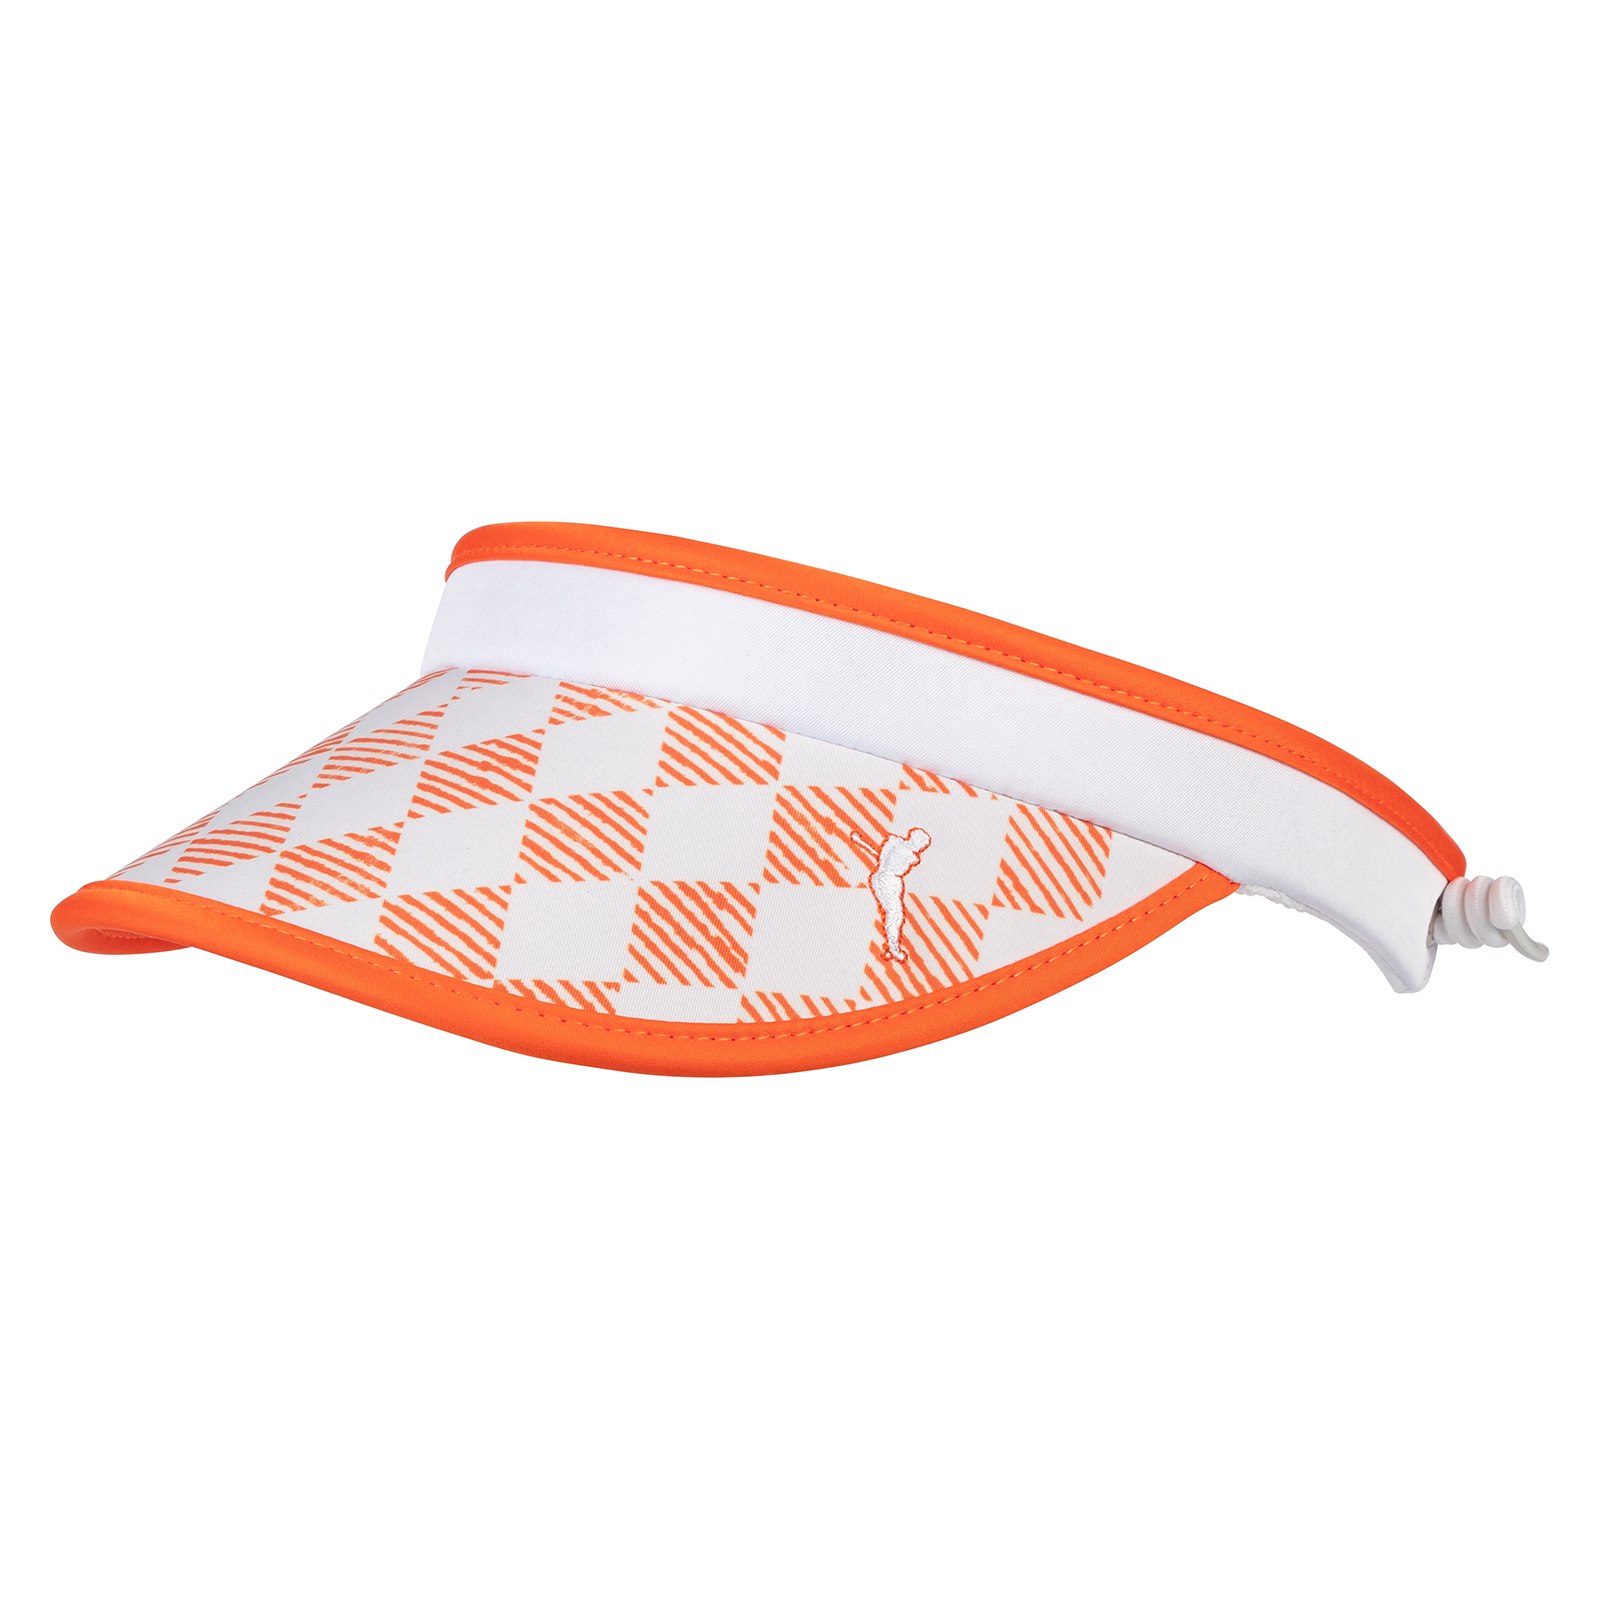 Ladies' golf visor with argyle pattern